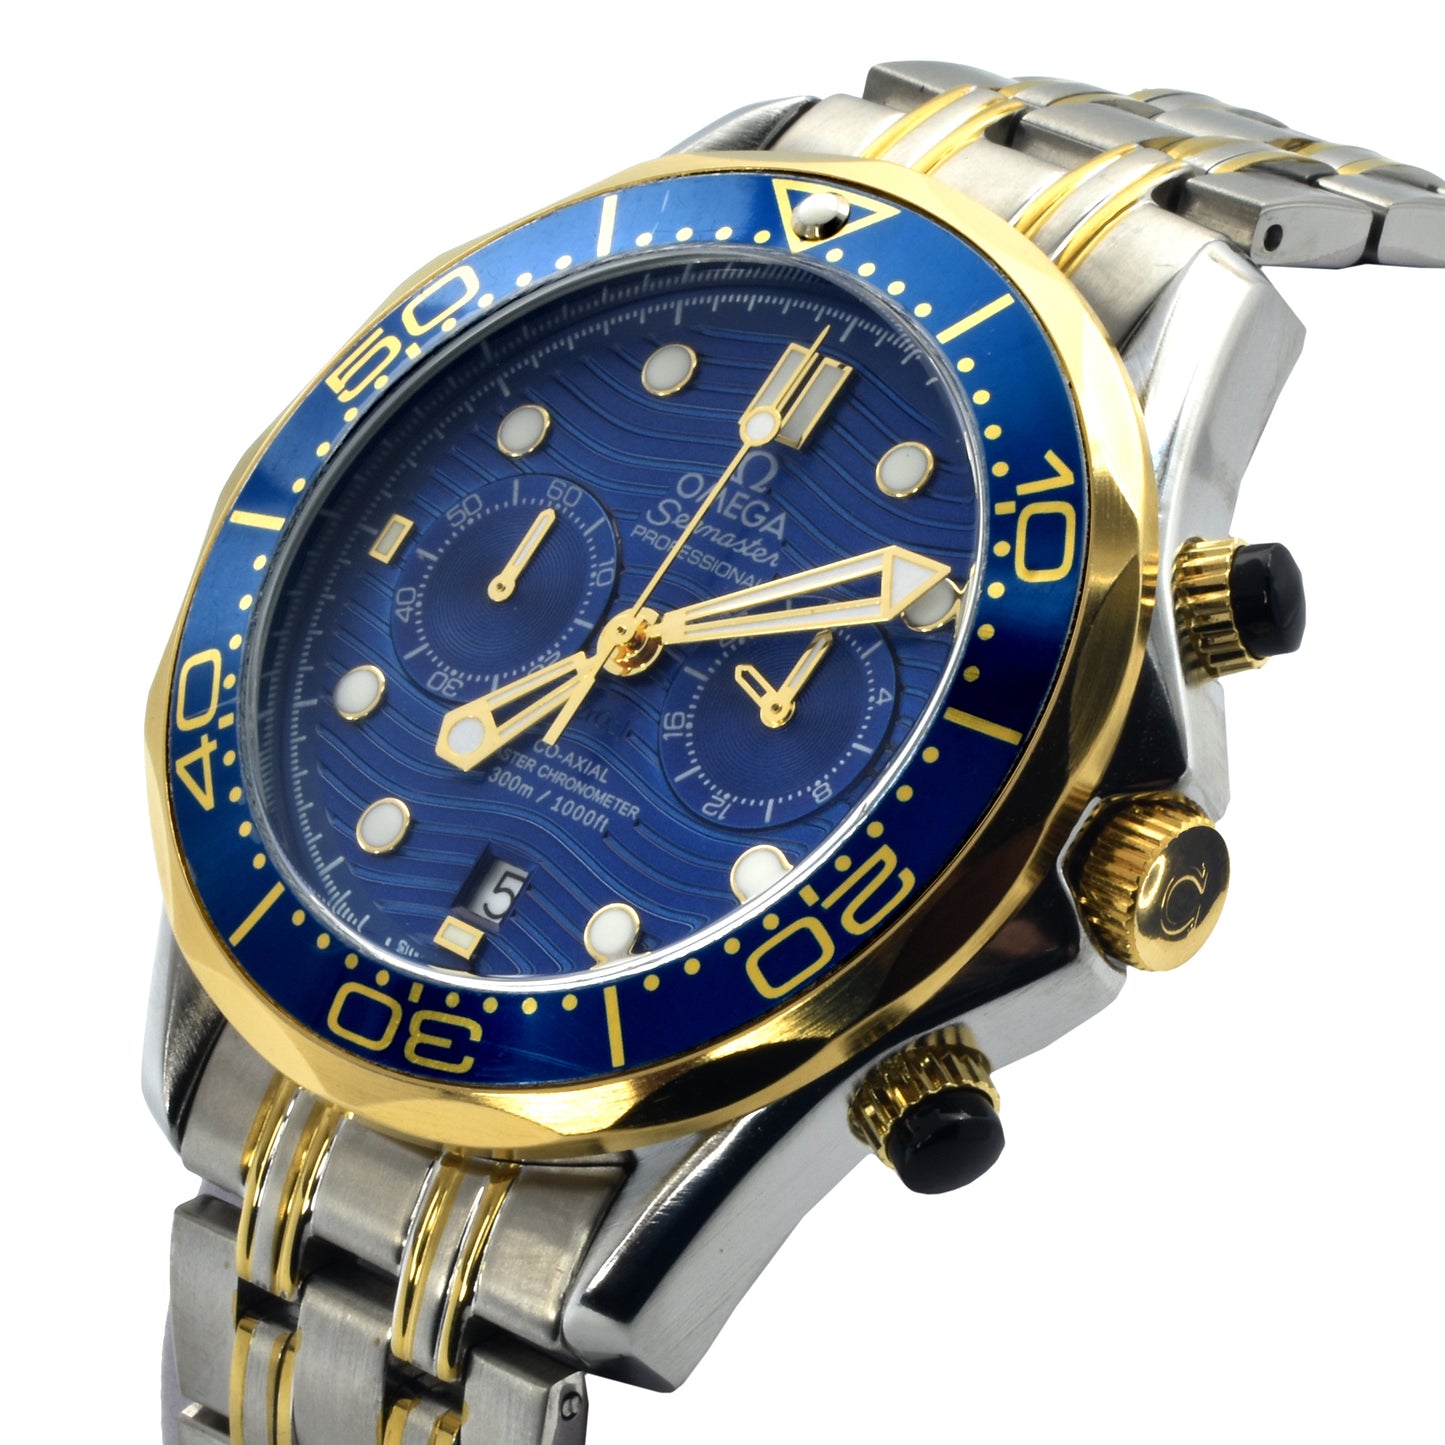 Premium Quality Chronograph Quartz Watch | OMGA Watch 1016